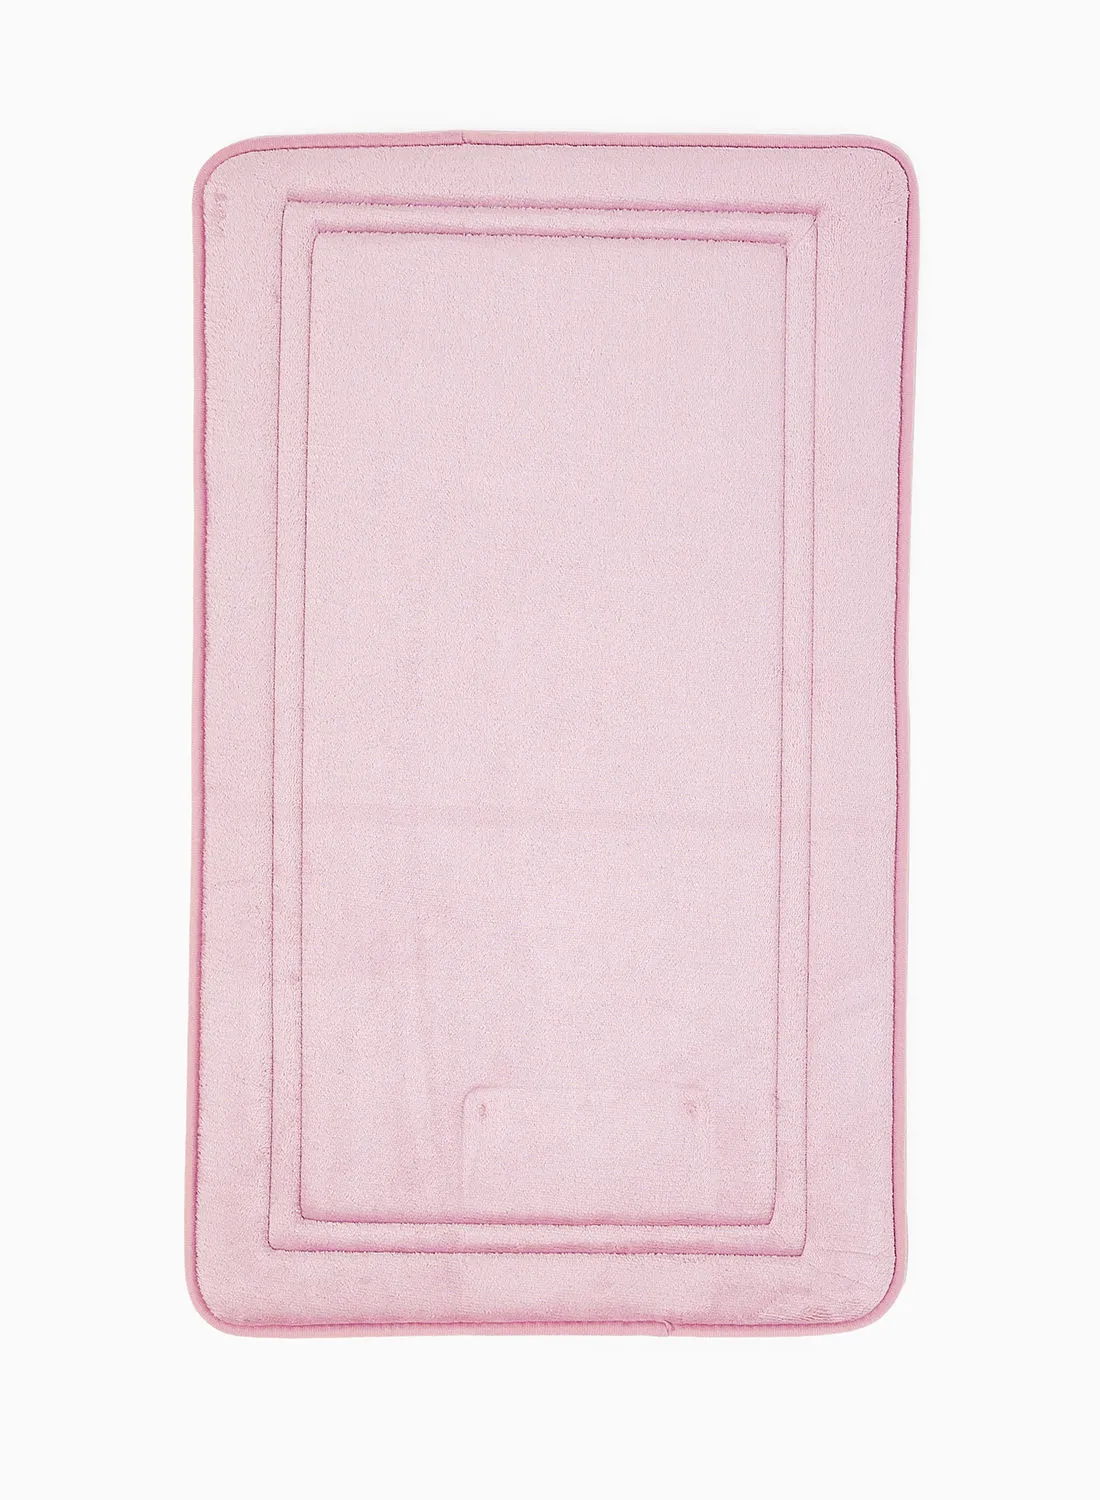 Amal Bath Mat - 44X73 Cm-Pink Color - Bathroom Mat Memory Foam